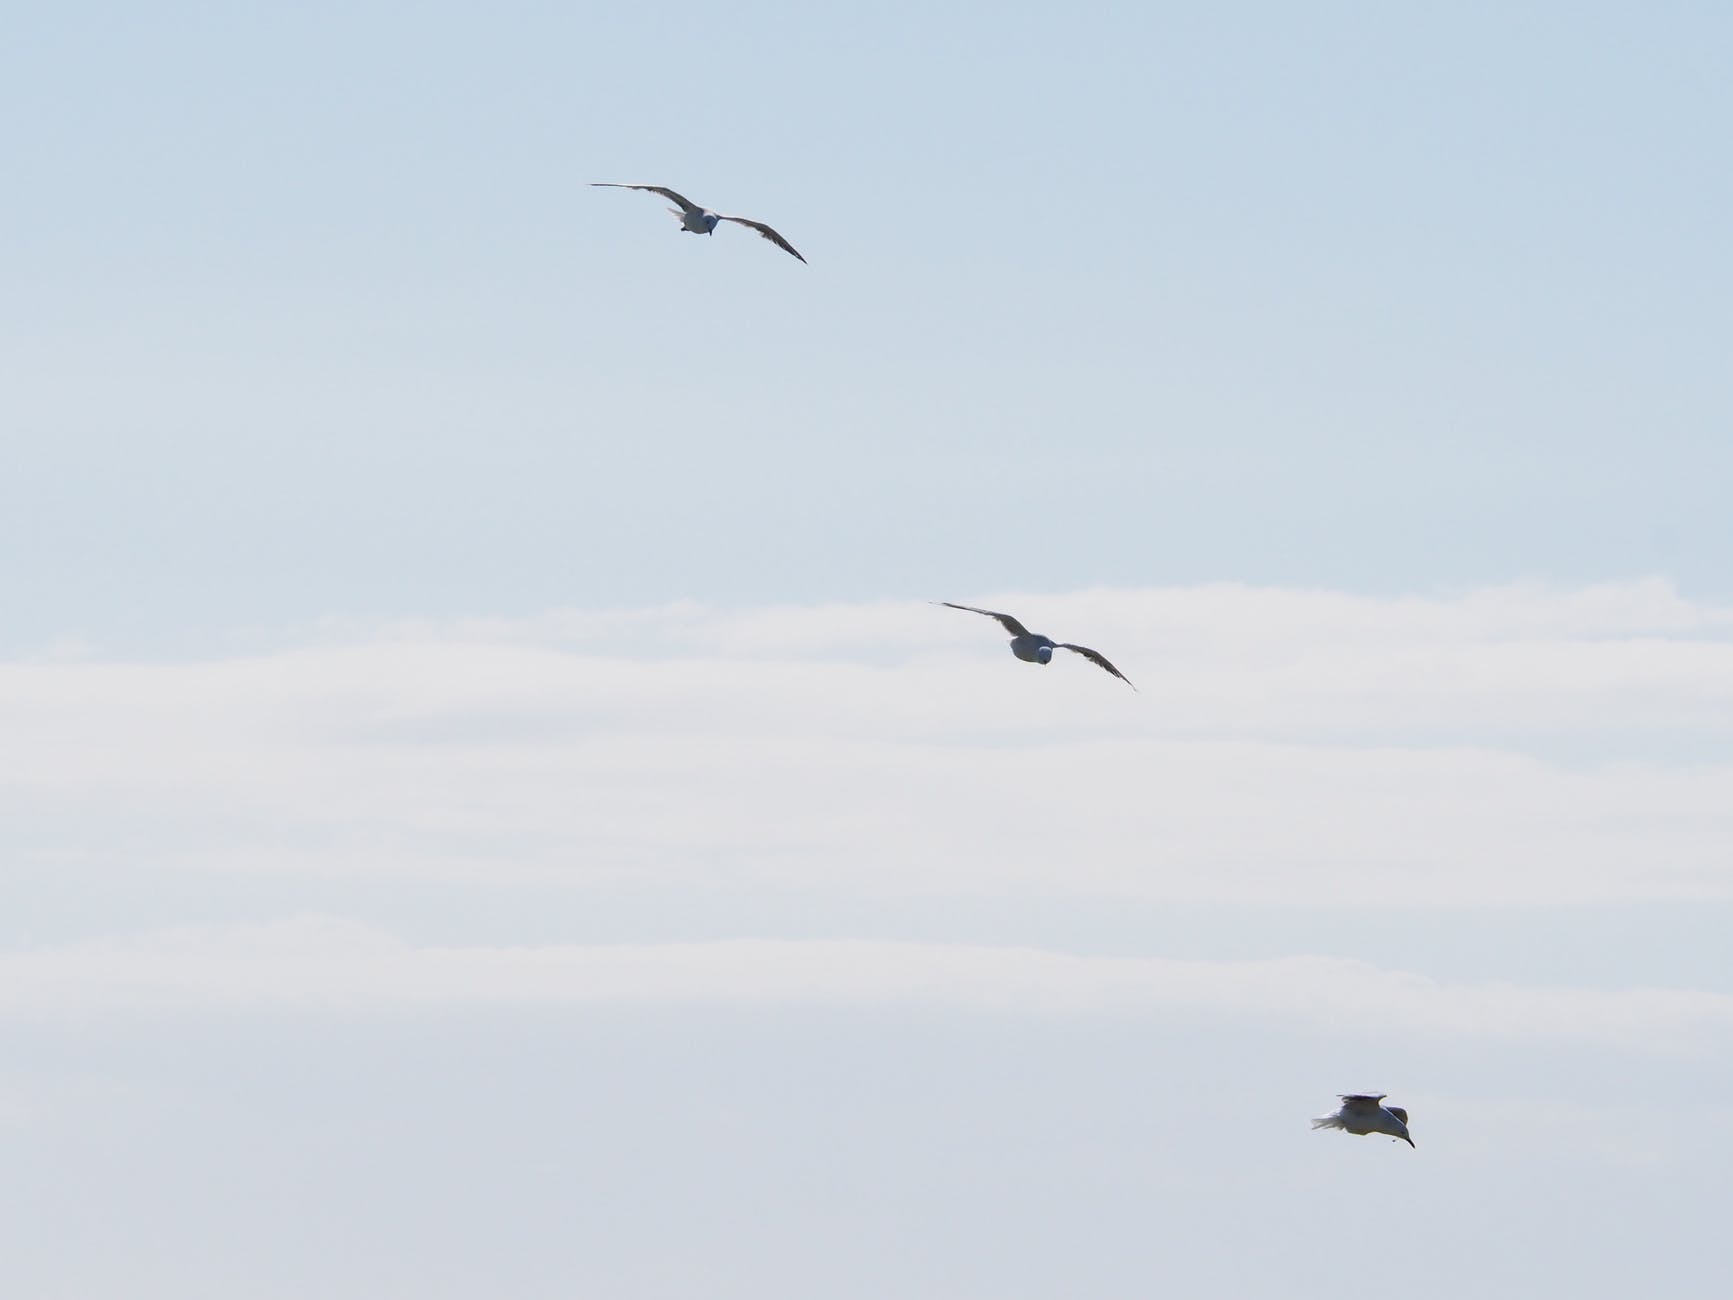 three birds flying under blue sky at daytime